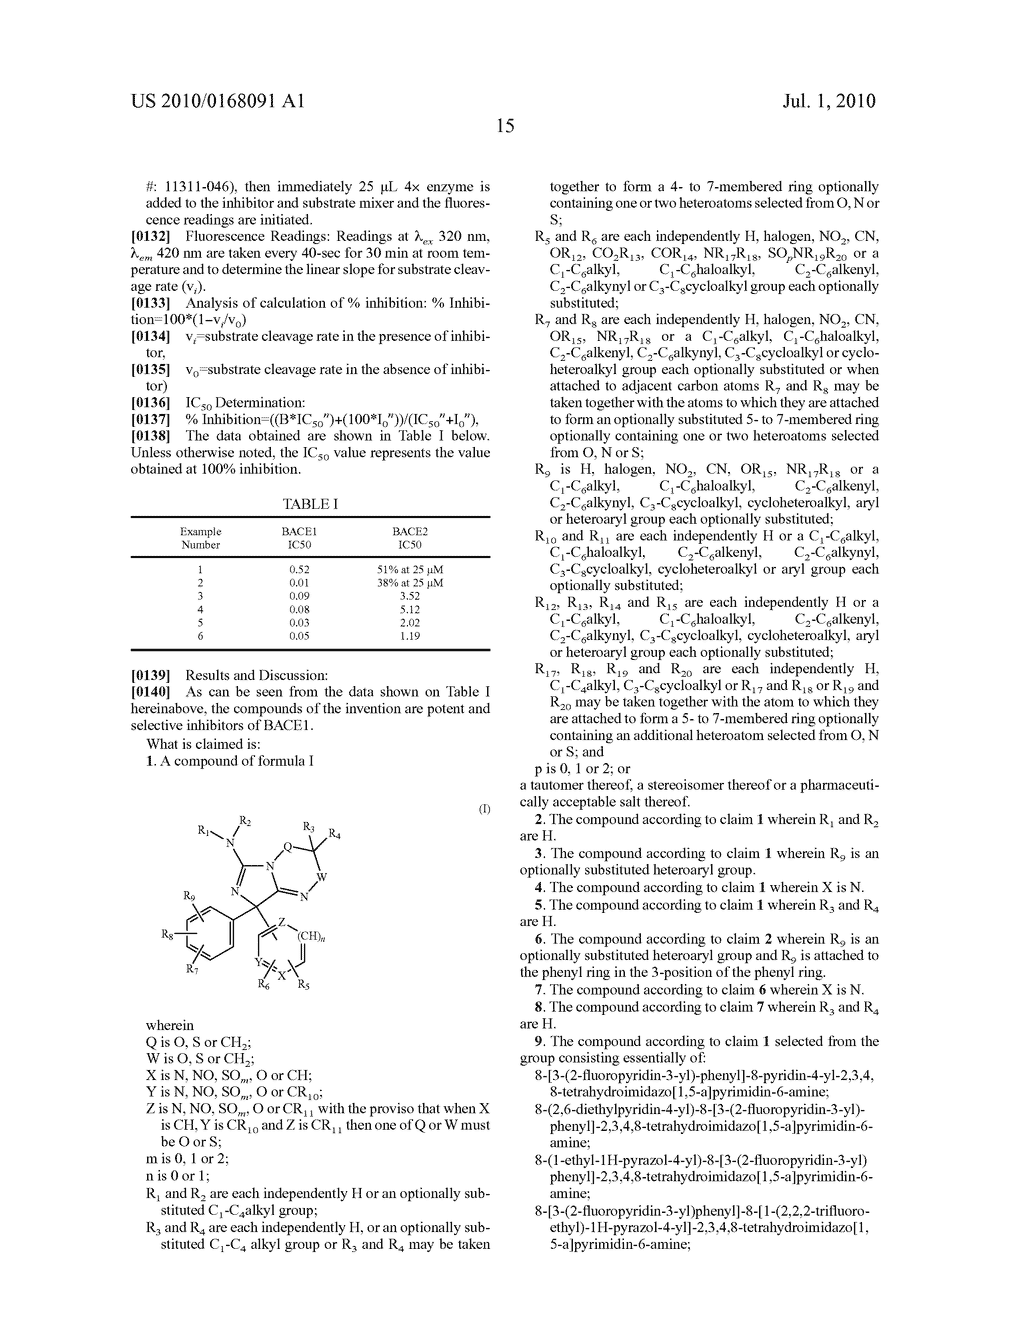 Imidazole Amines As Inhibitors Of Beta-secretase - diagram, schematic, and image 16